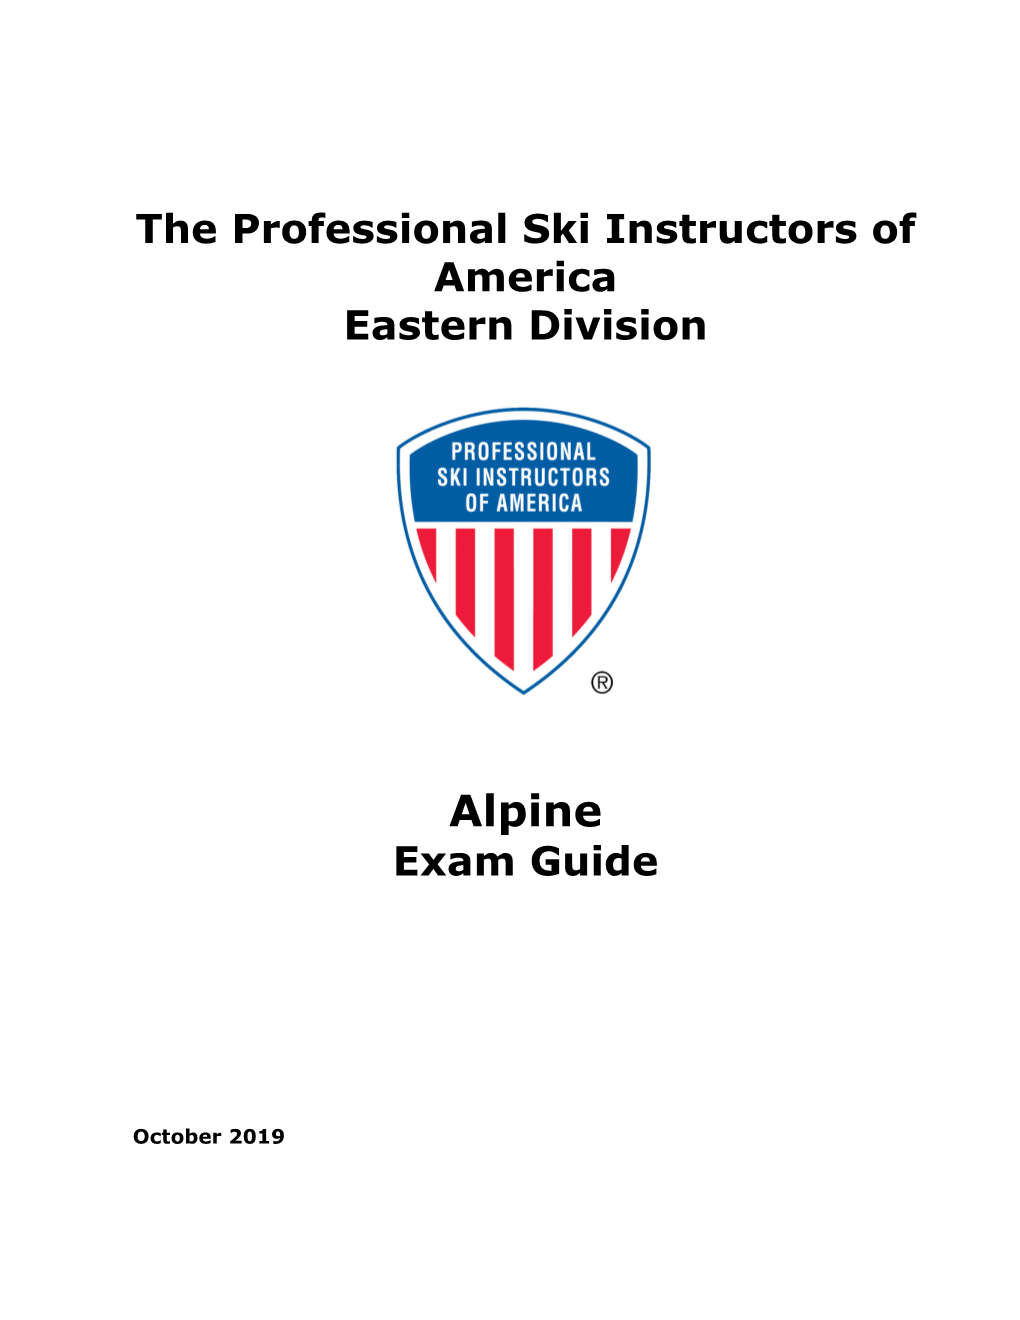 Alpine Exam Guide